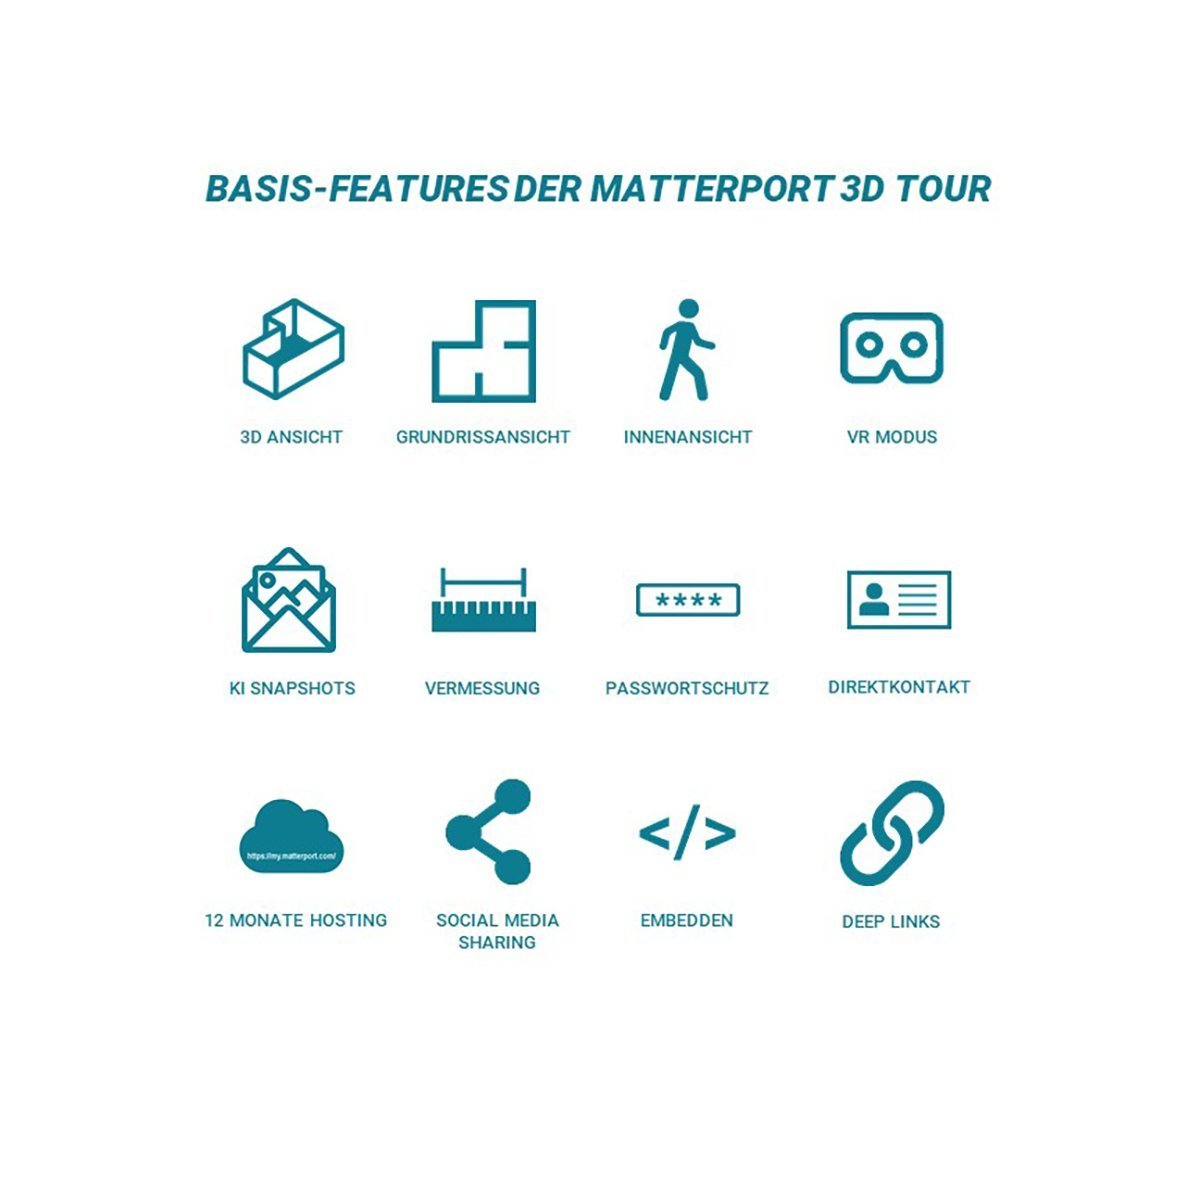 3D Tour Scan | Matterport Pro3 - MESH IMAGES BERLIN MESH IMAGES BERLIN Services